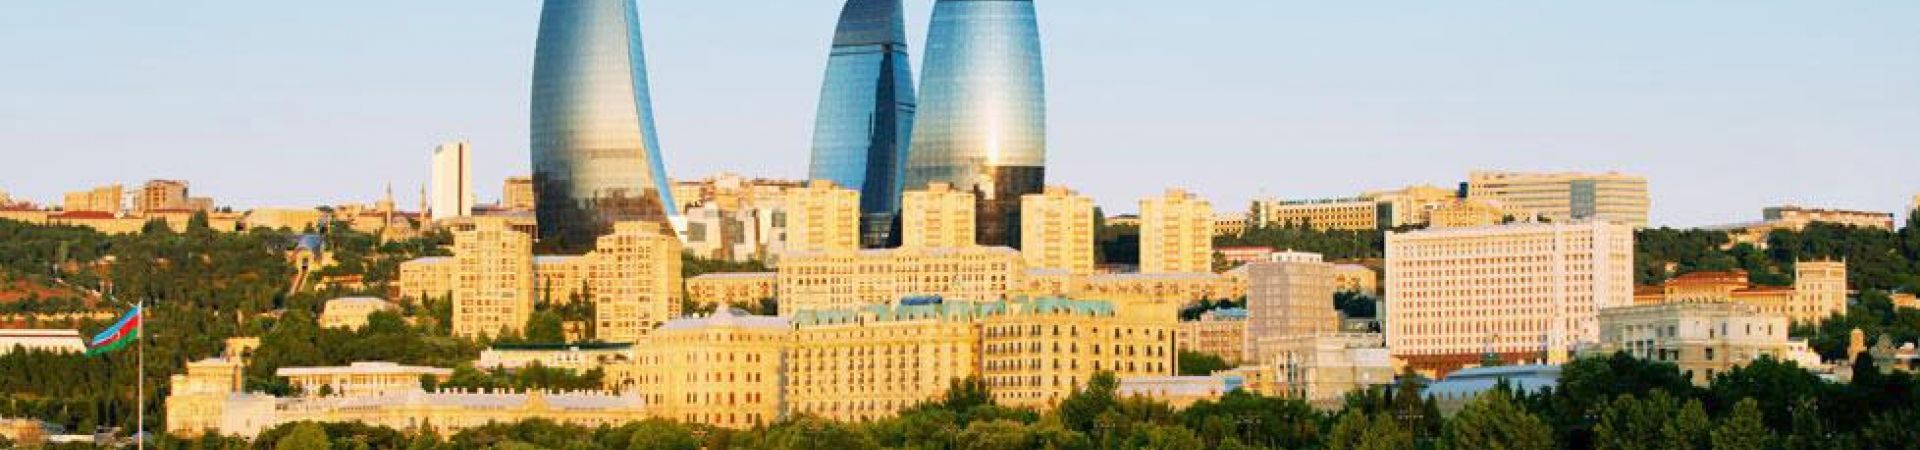 Fairmont Baku Flame Towers Azerbaijan